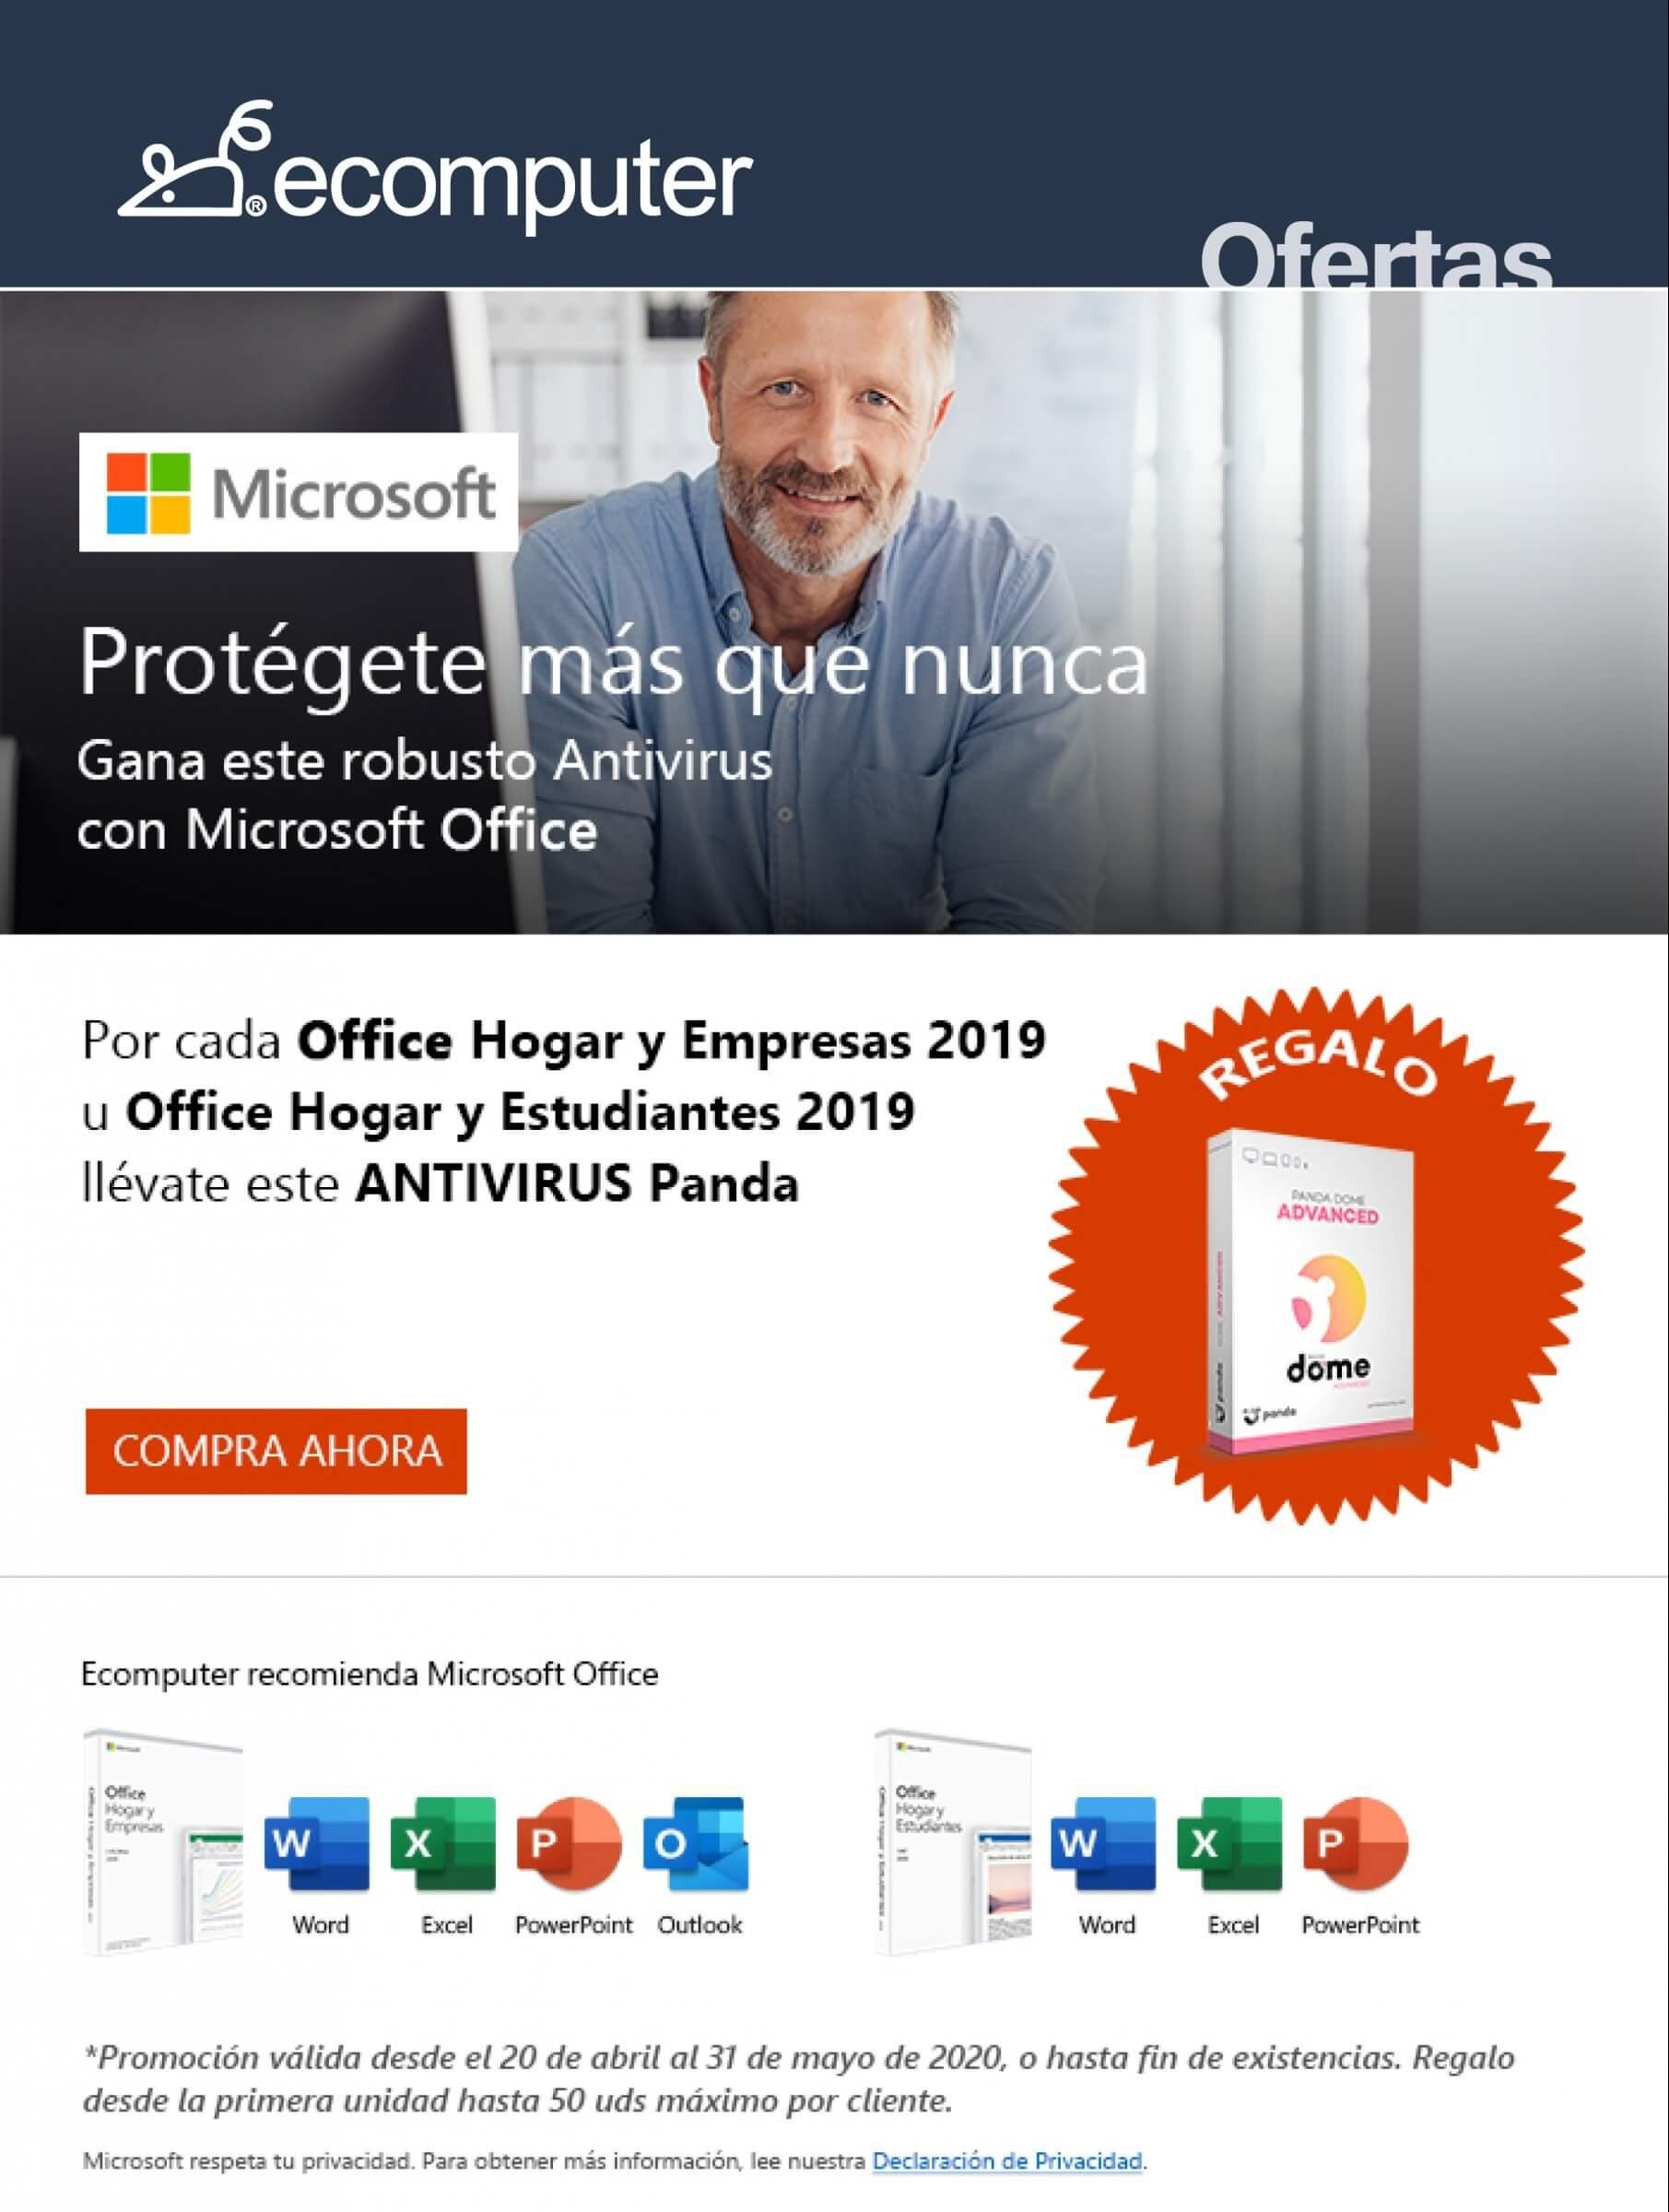 Oferta Office 2019 y Antivirus Panda